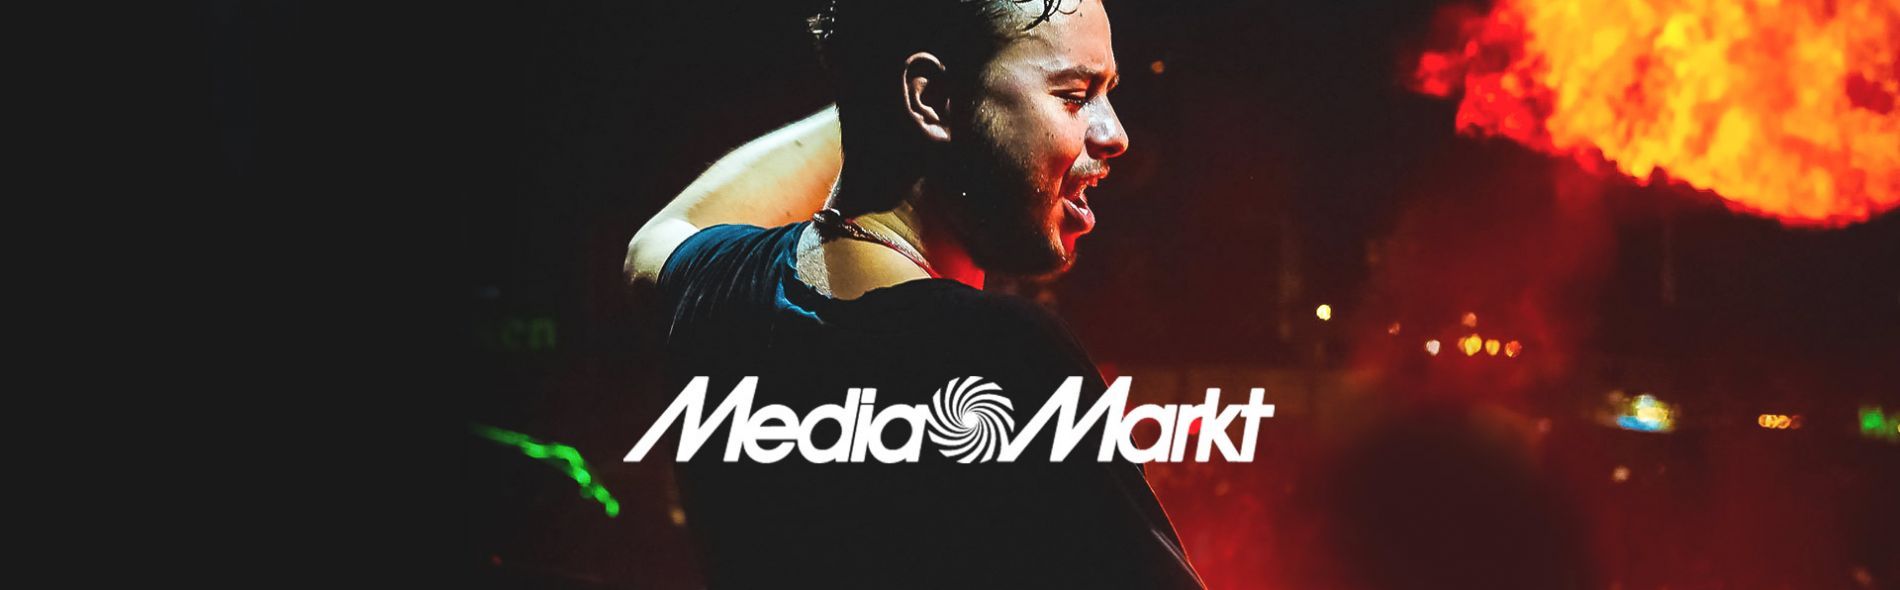 Mediamarkt & DJ Quintino